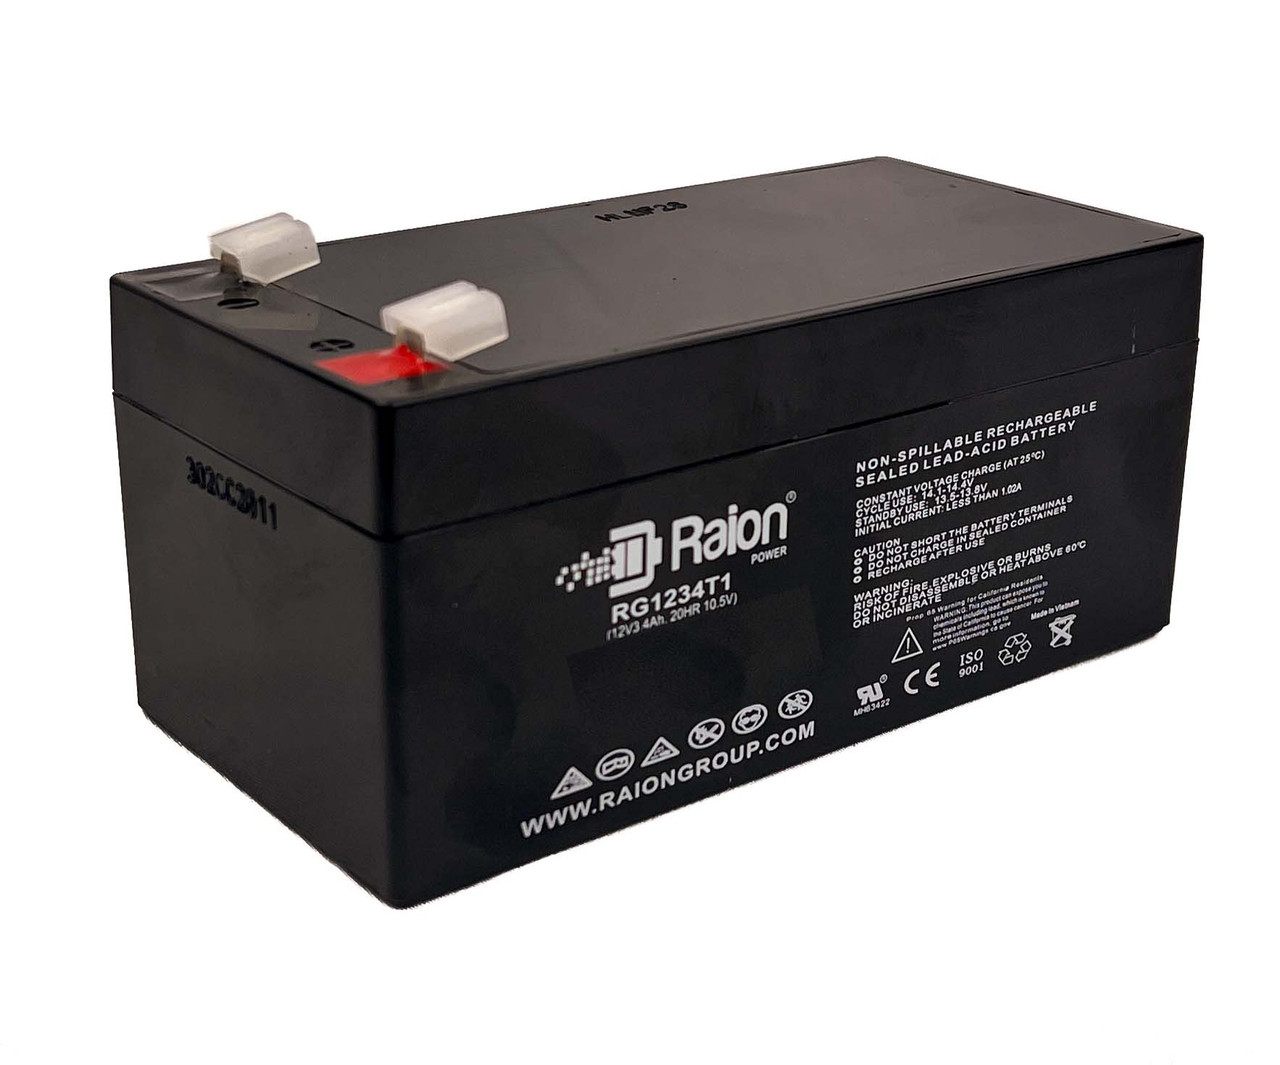 Raion Power 12V 3.4Ah Non-Spillable Replacement Battery for LONG WP28-12NE